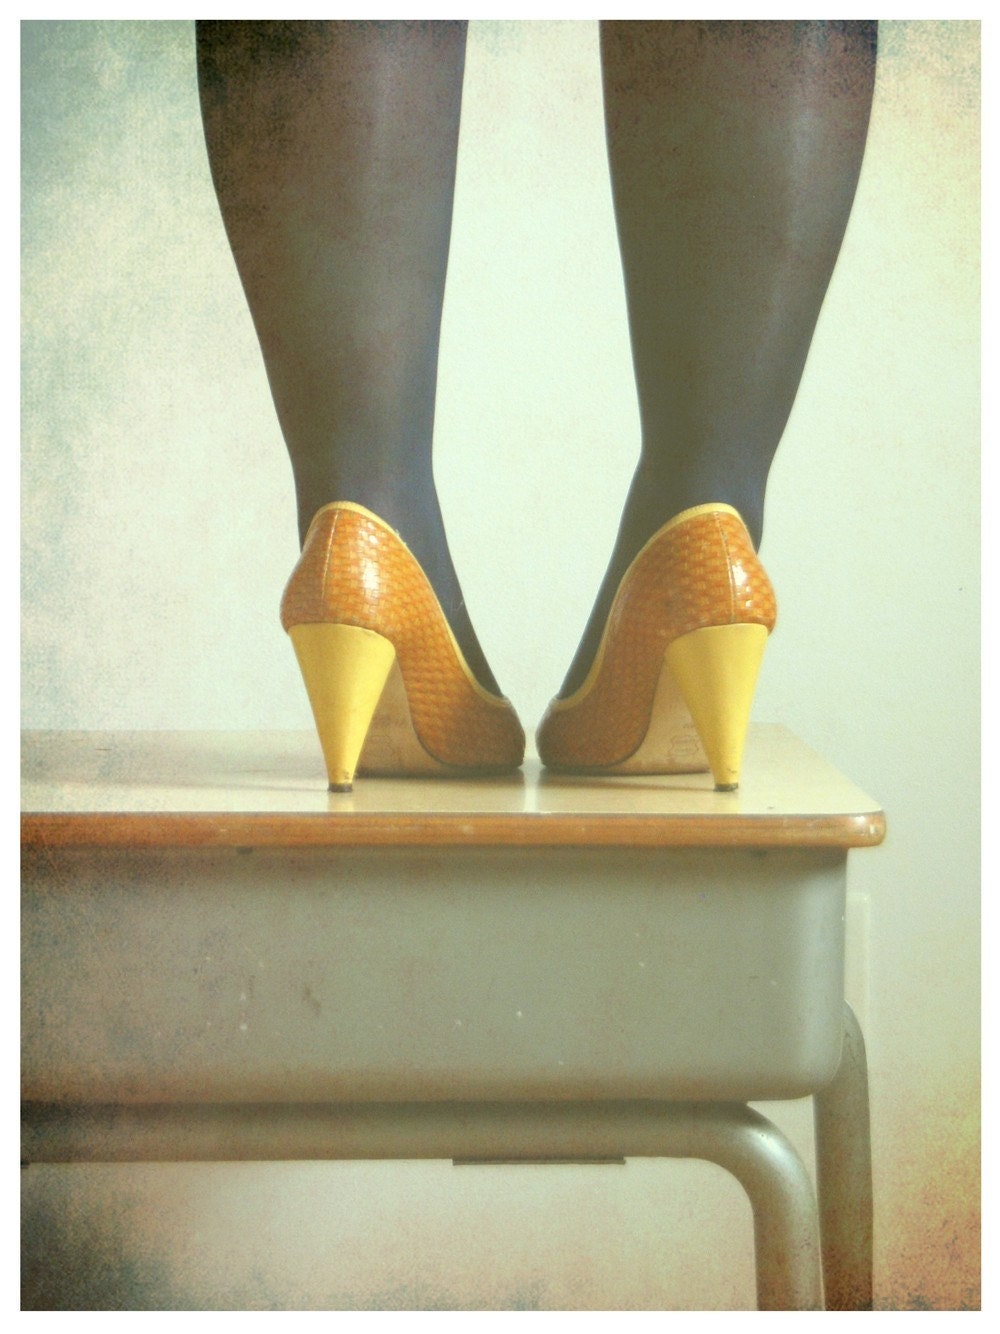 My Pretty Power 5x7 Fine Art Print--Vintage Shoes Elementary School Desk Retro Photograph